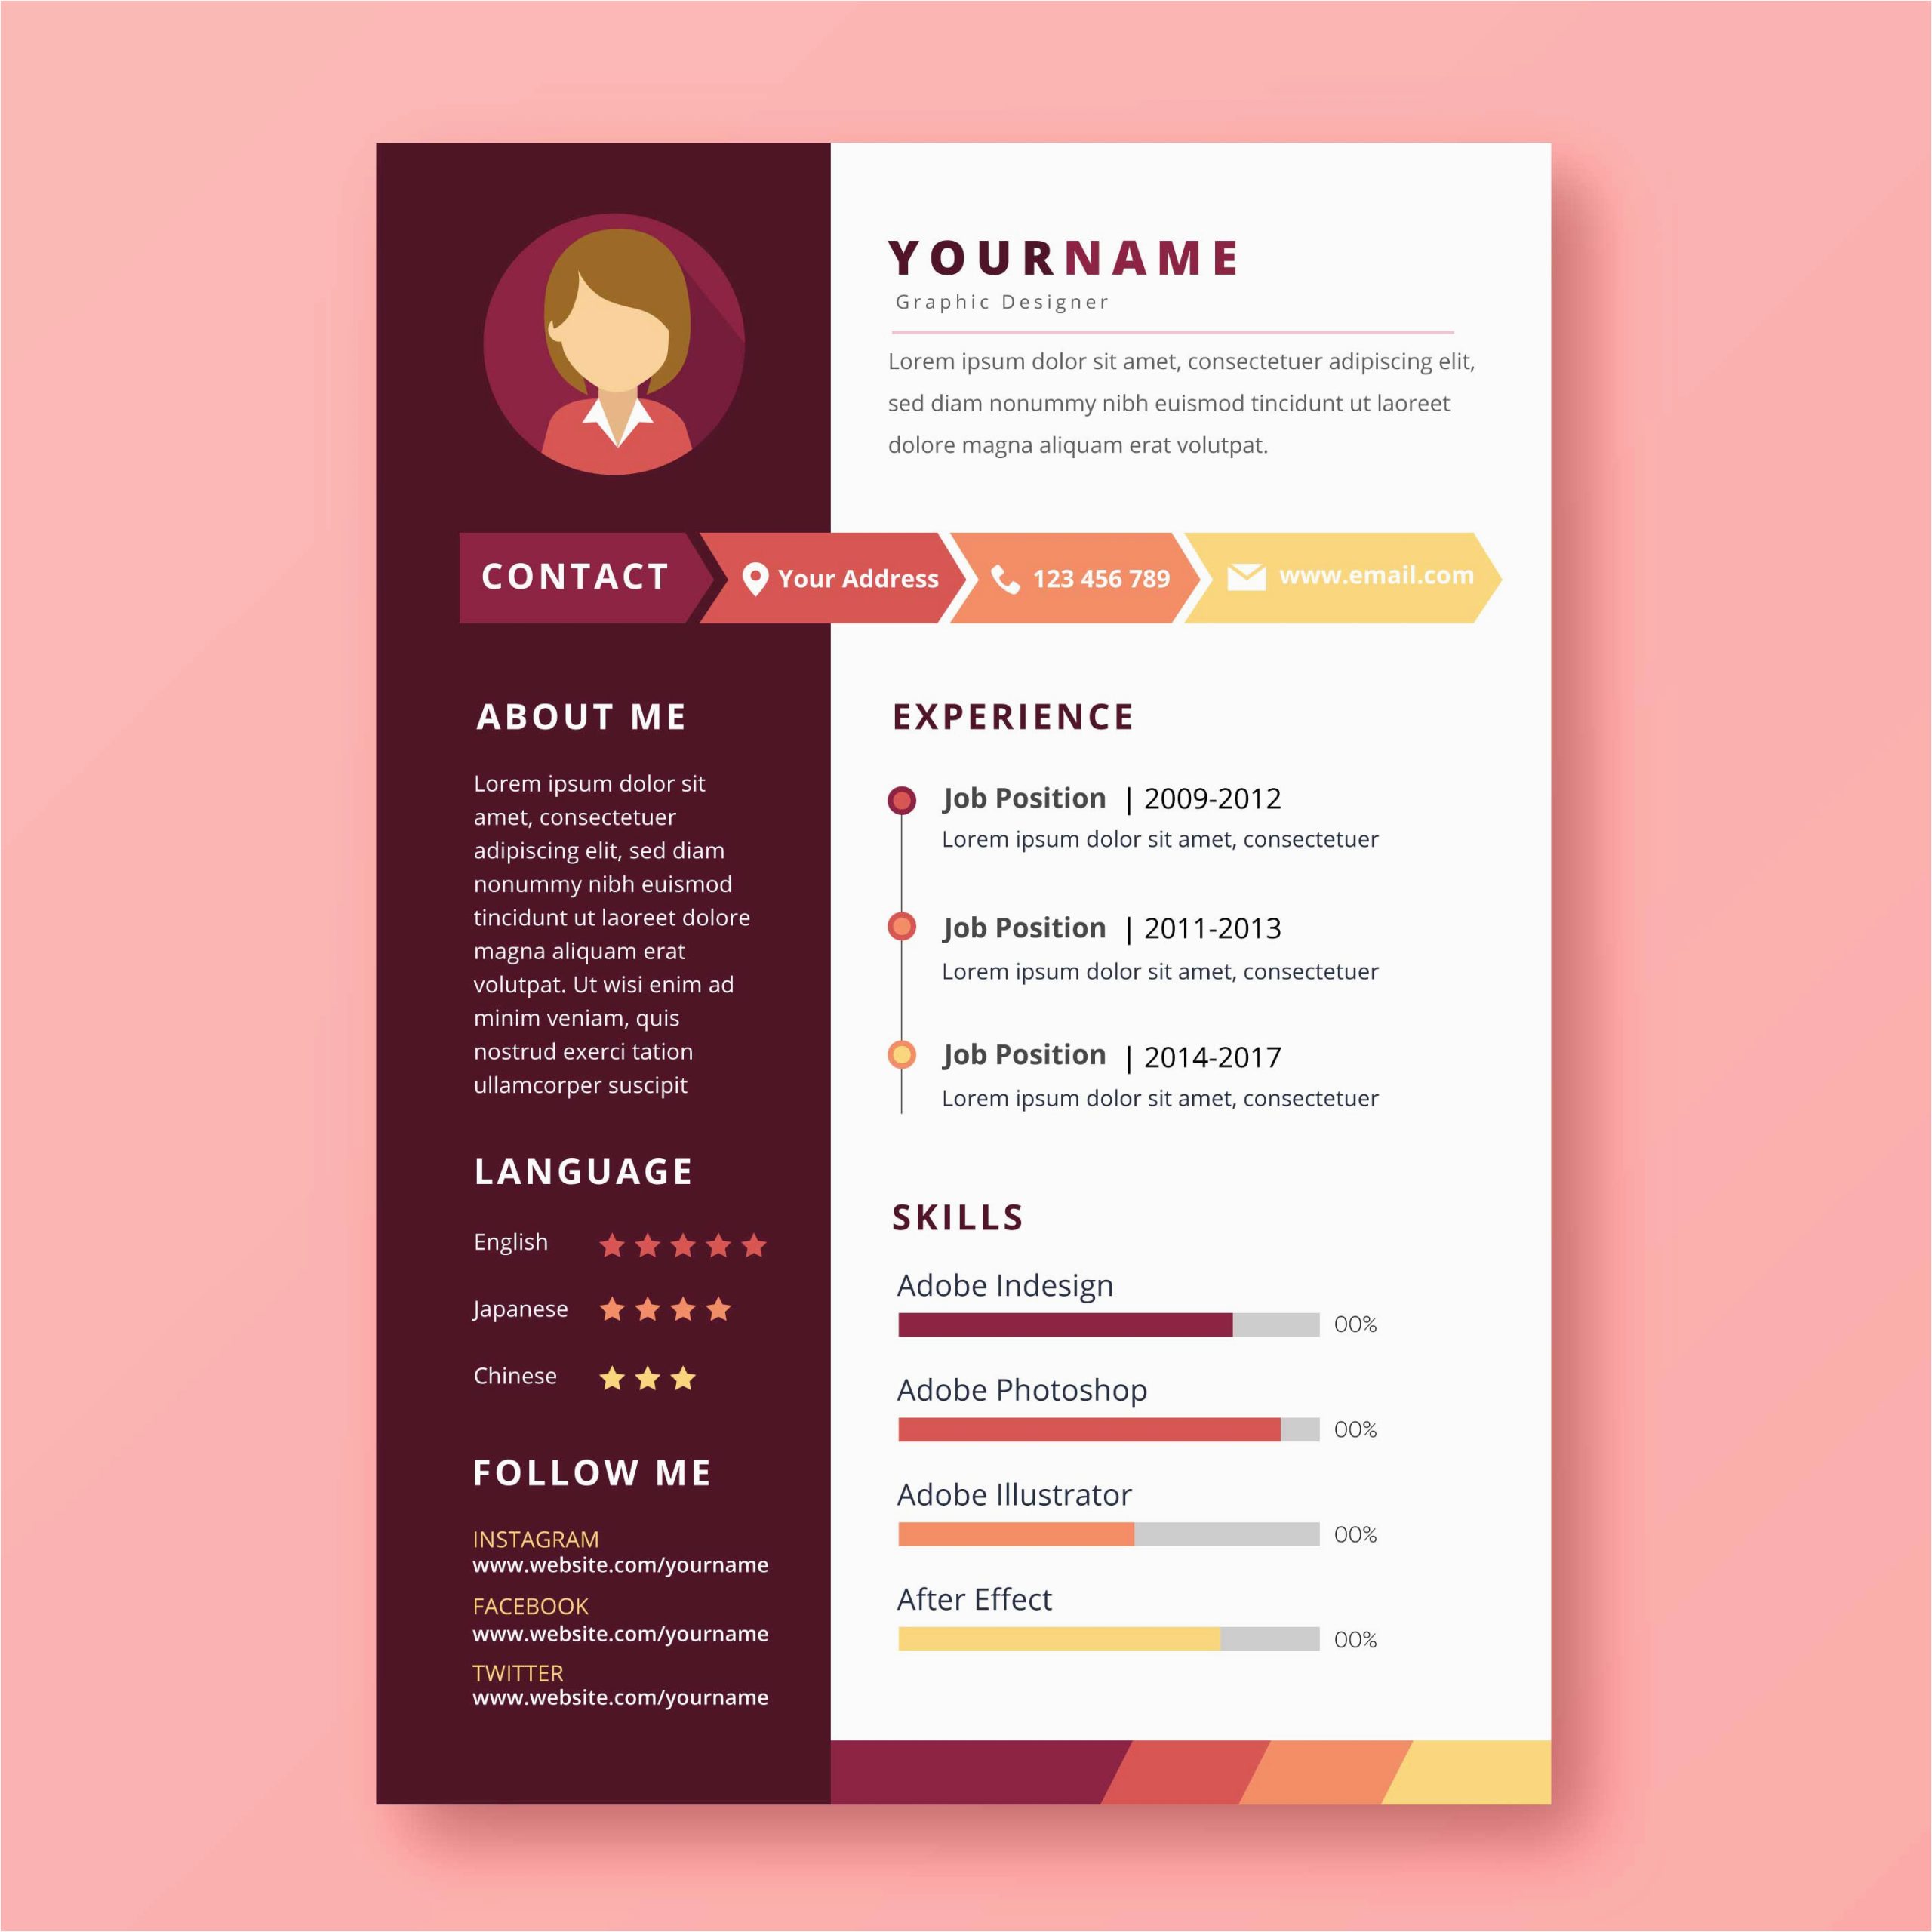 Free Sample Resume for Graphic Designer Graphic Designer Resume Vector Art at Vecteezy